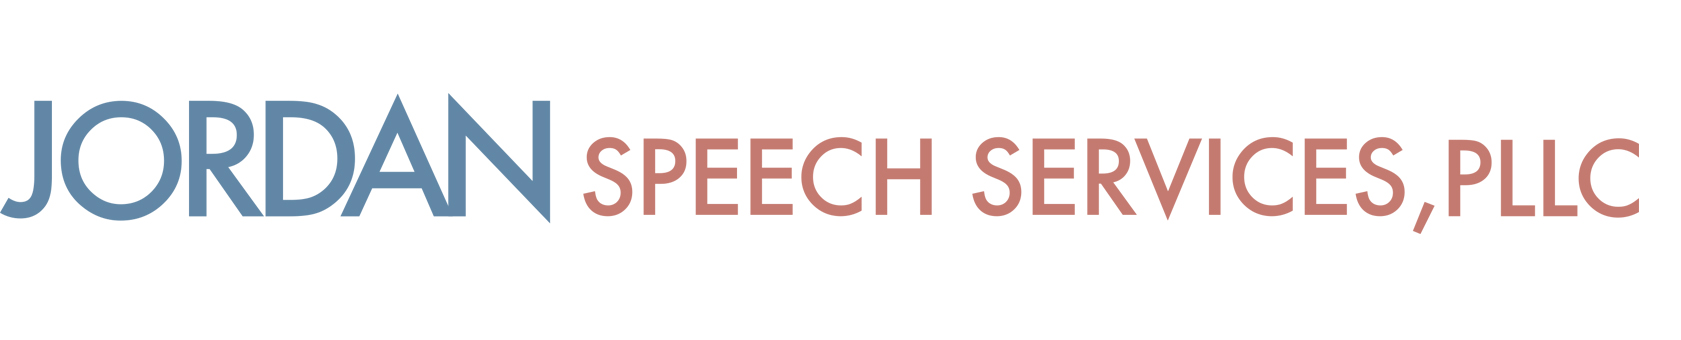 Jordan Speech Services, PLLC